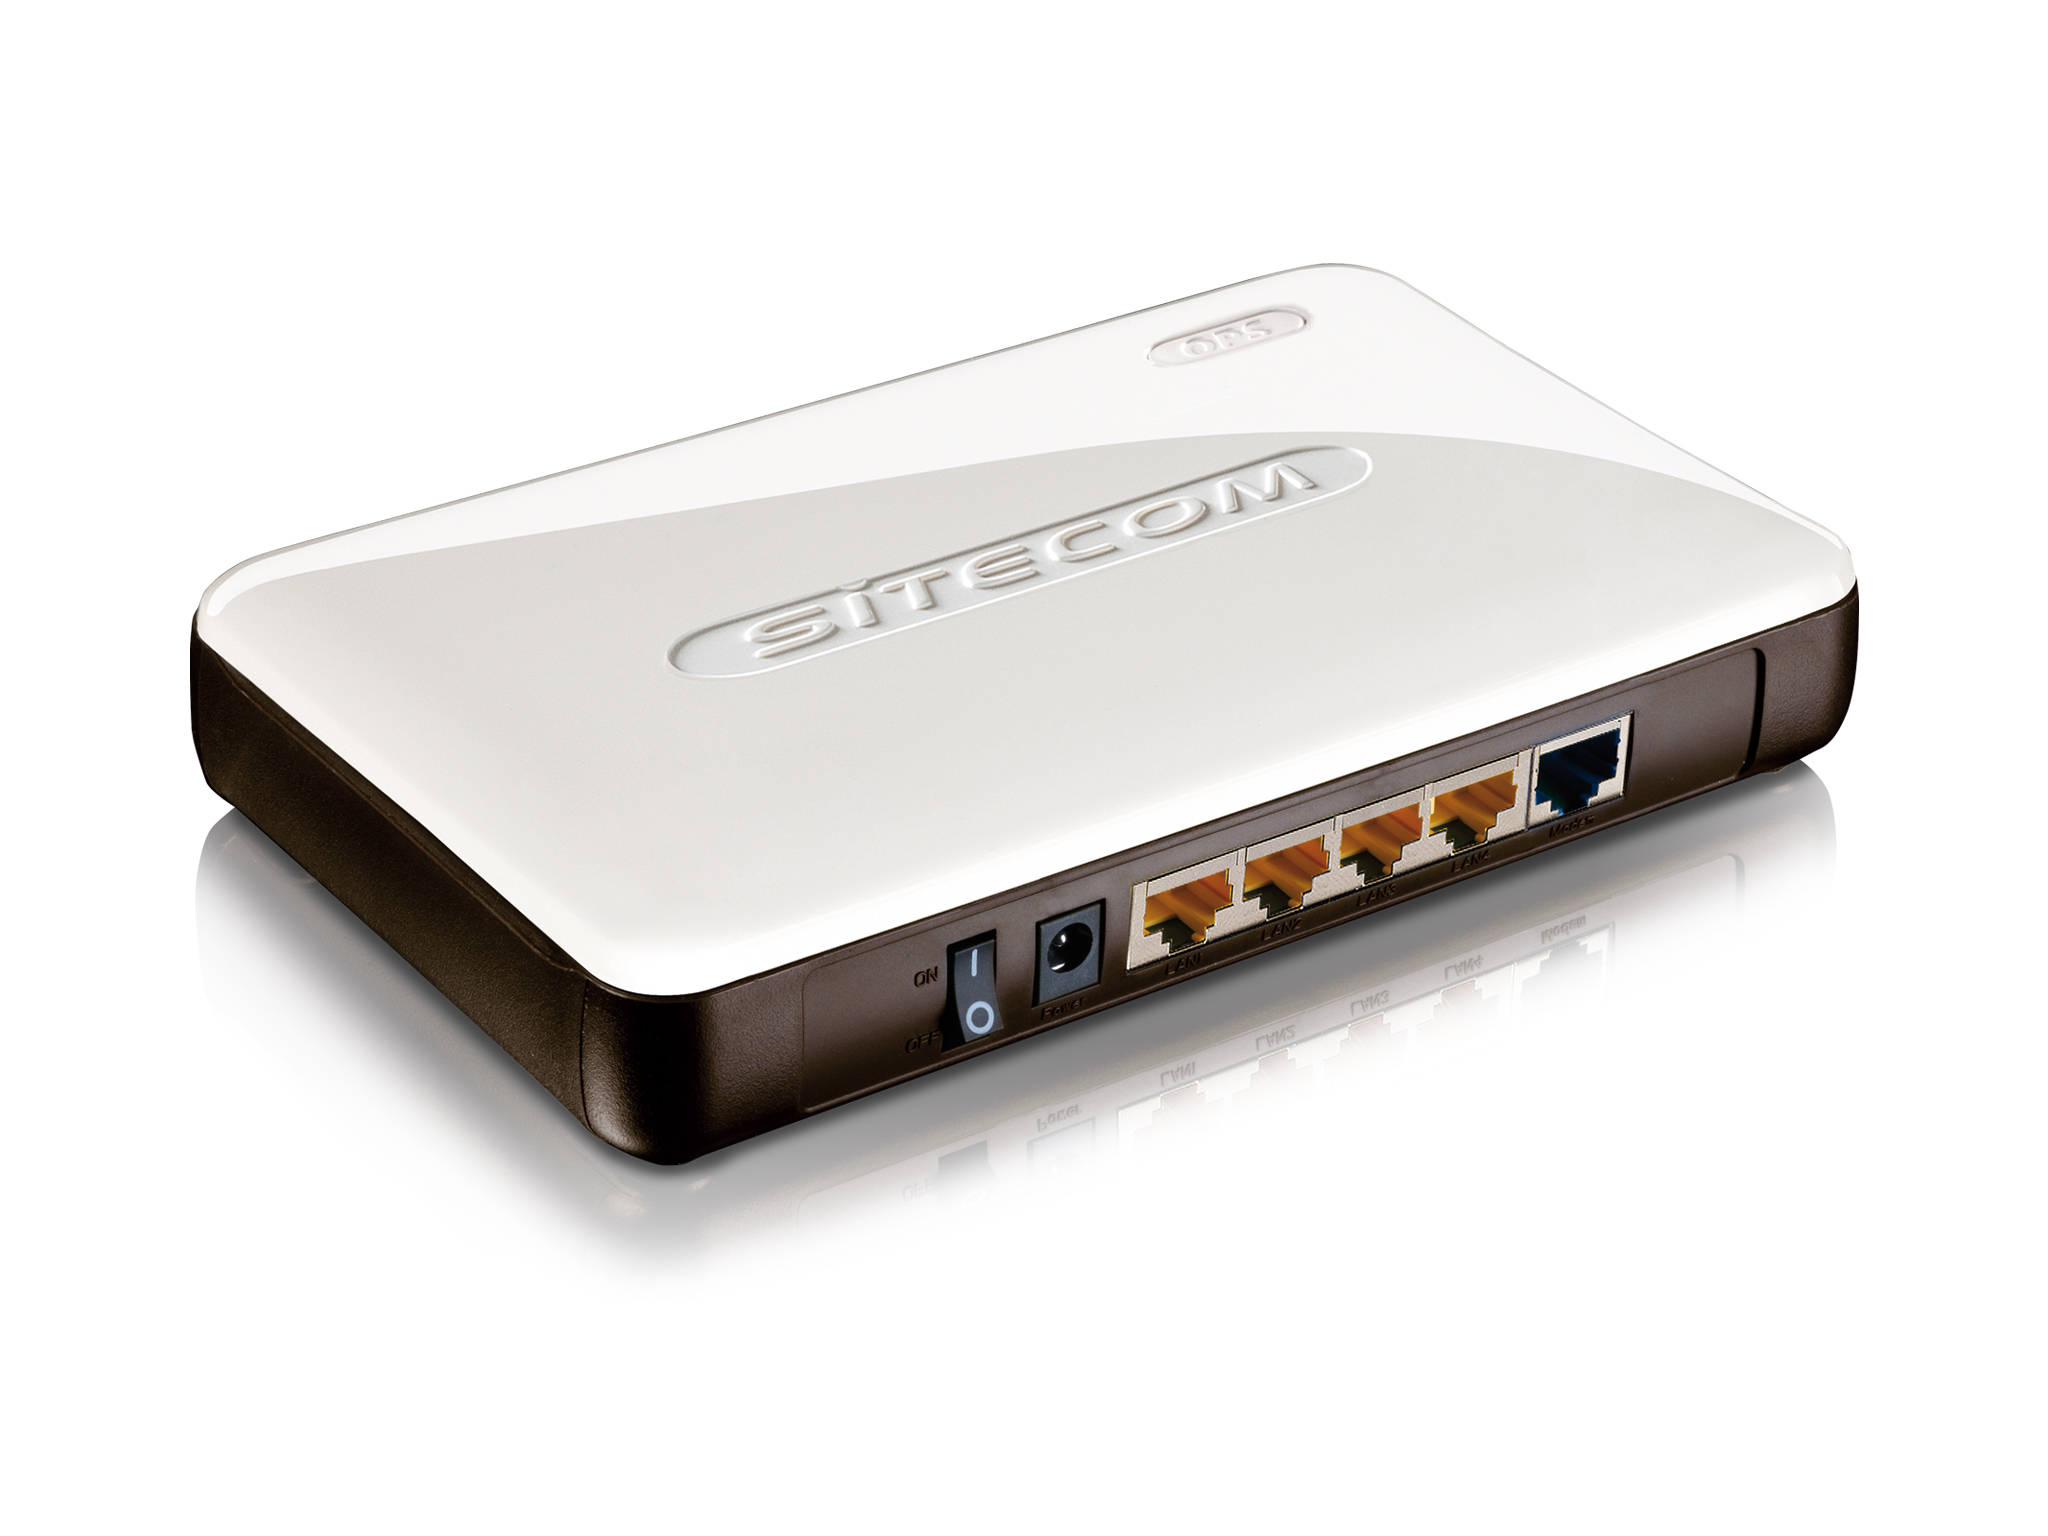 Sitecom wireless gigabit router 300N con Sitecom Cloud Security